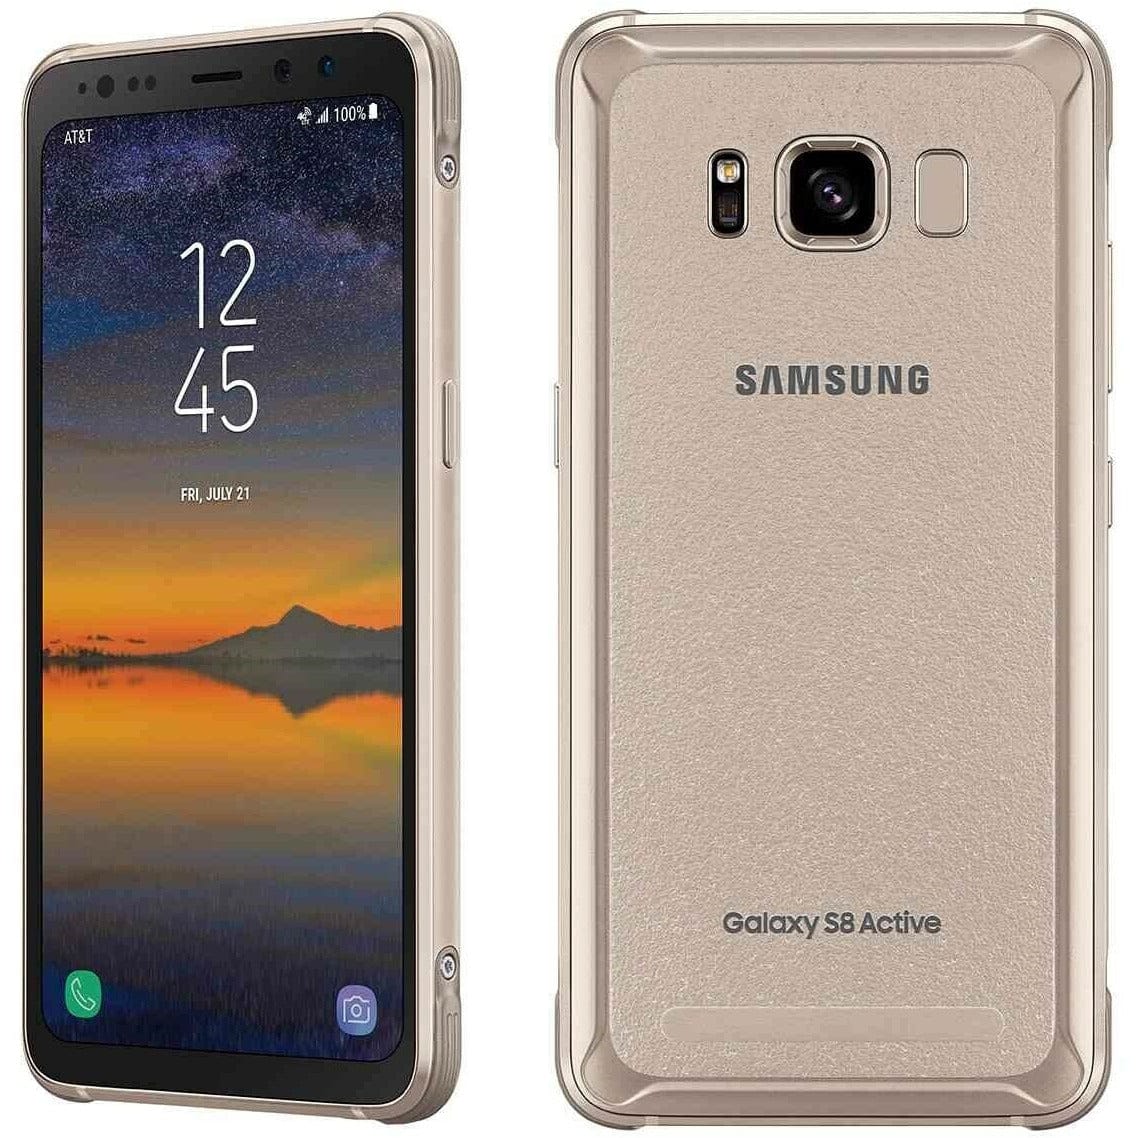 Samsung Galaxy S8 Active G892 64GB GSM